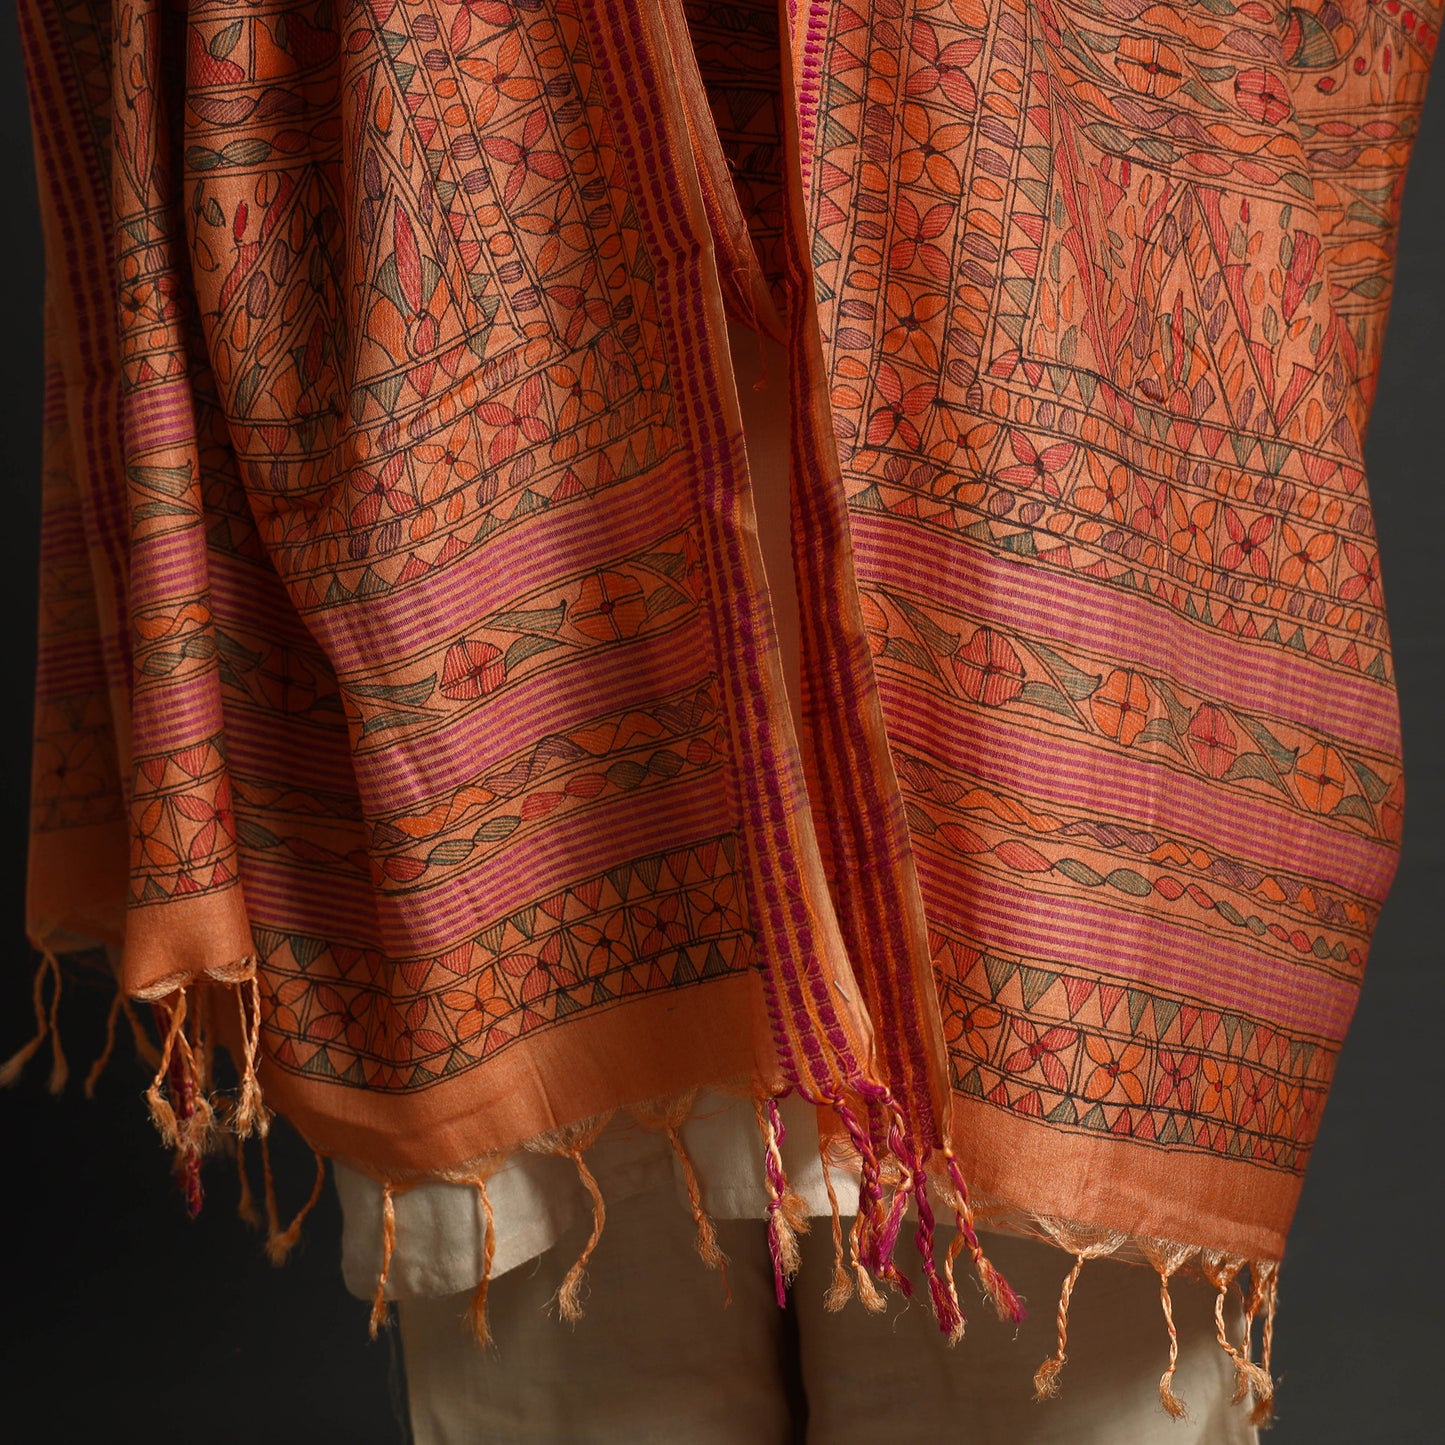 Orange - Traditional Madhubani Handpainted Tussar Silk Cotton Handloom Dupatta with Tassels 12